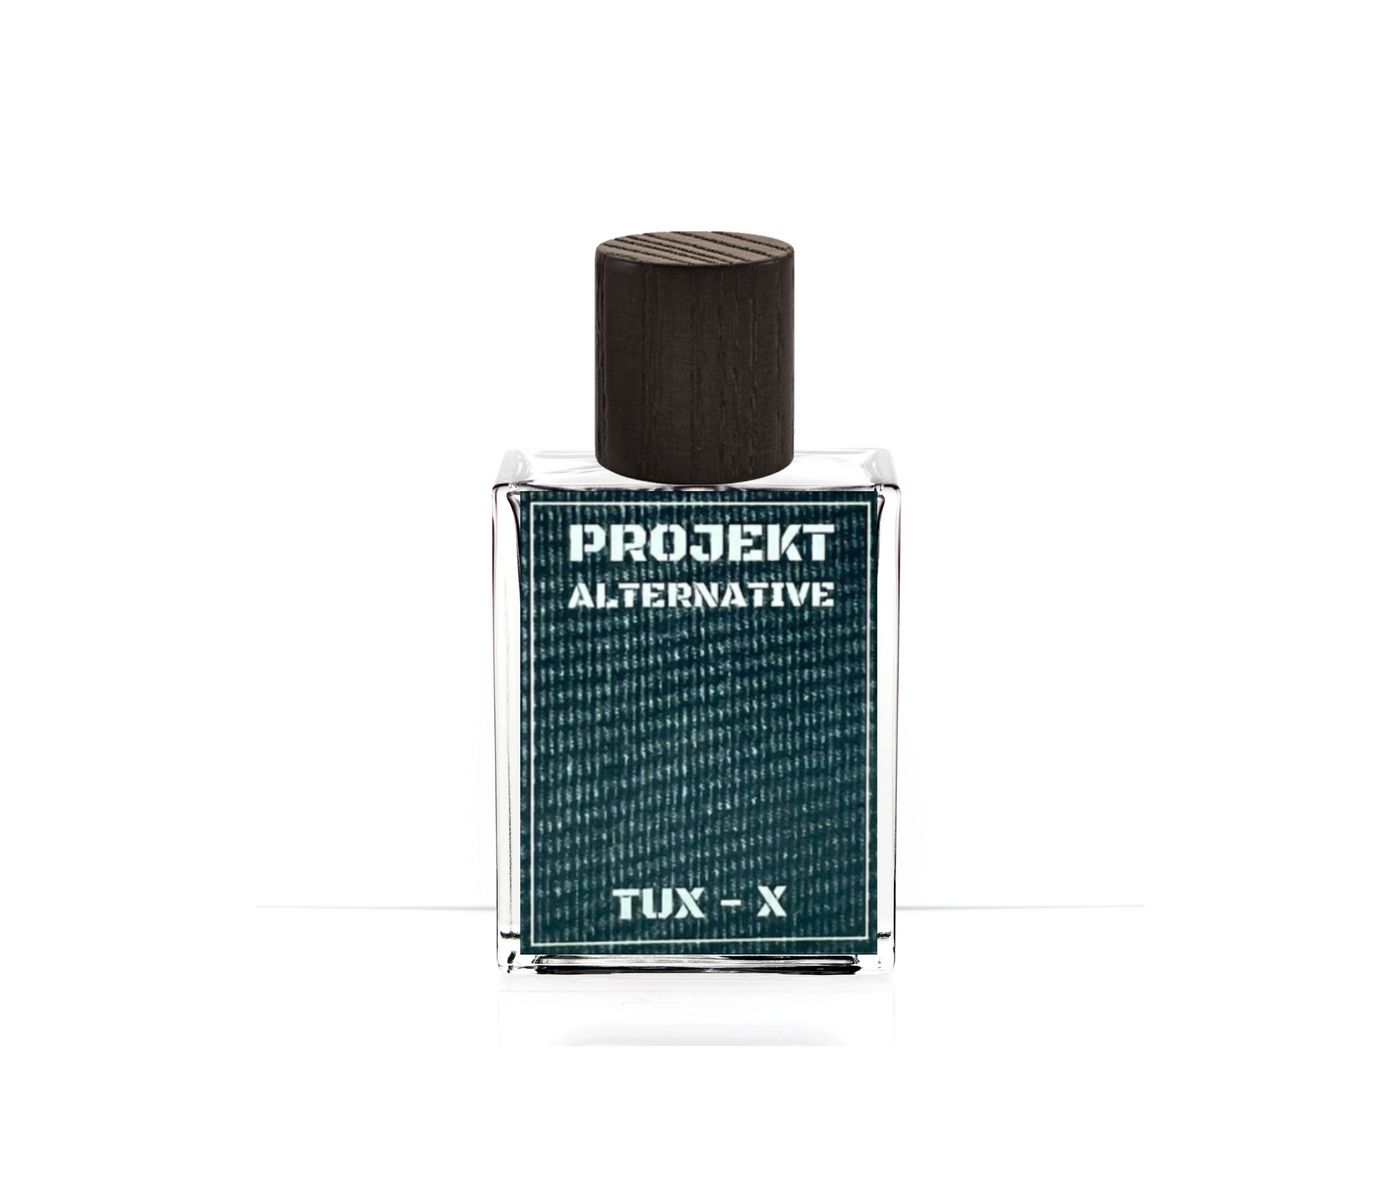 Tux-X By Projekt Alternative